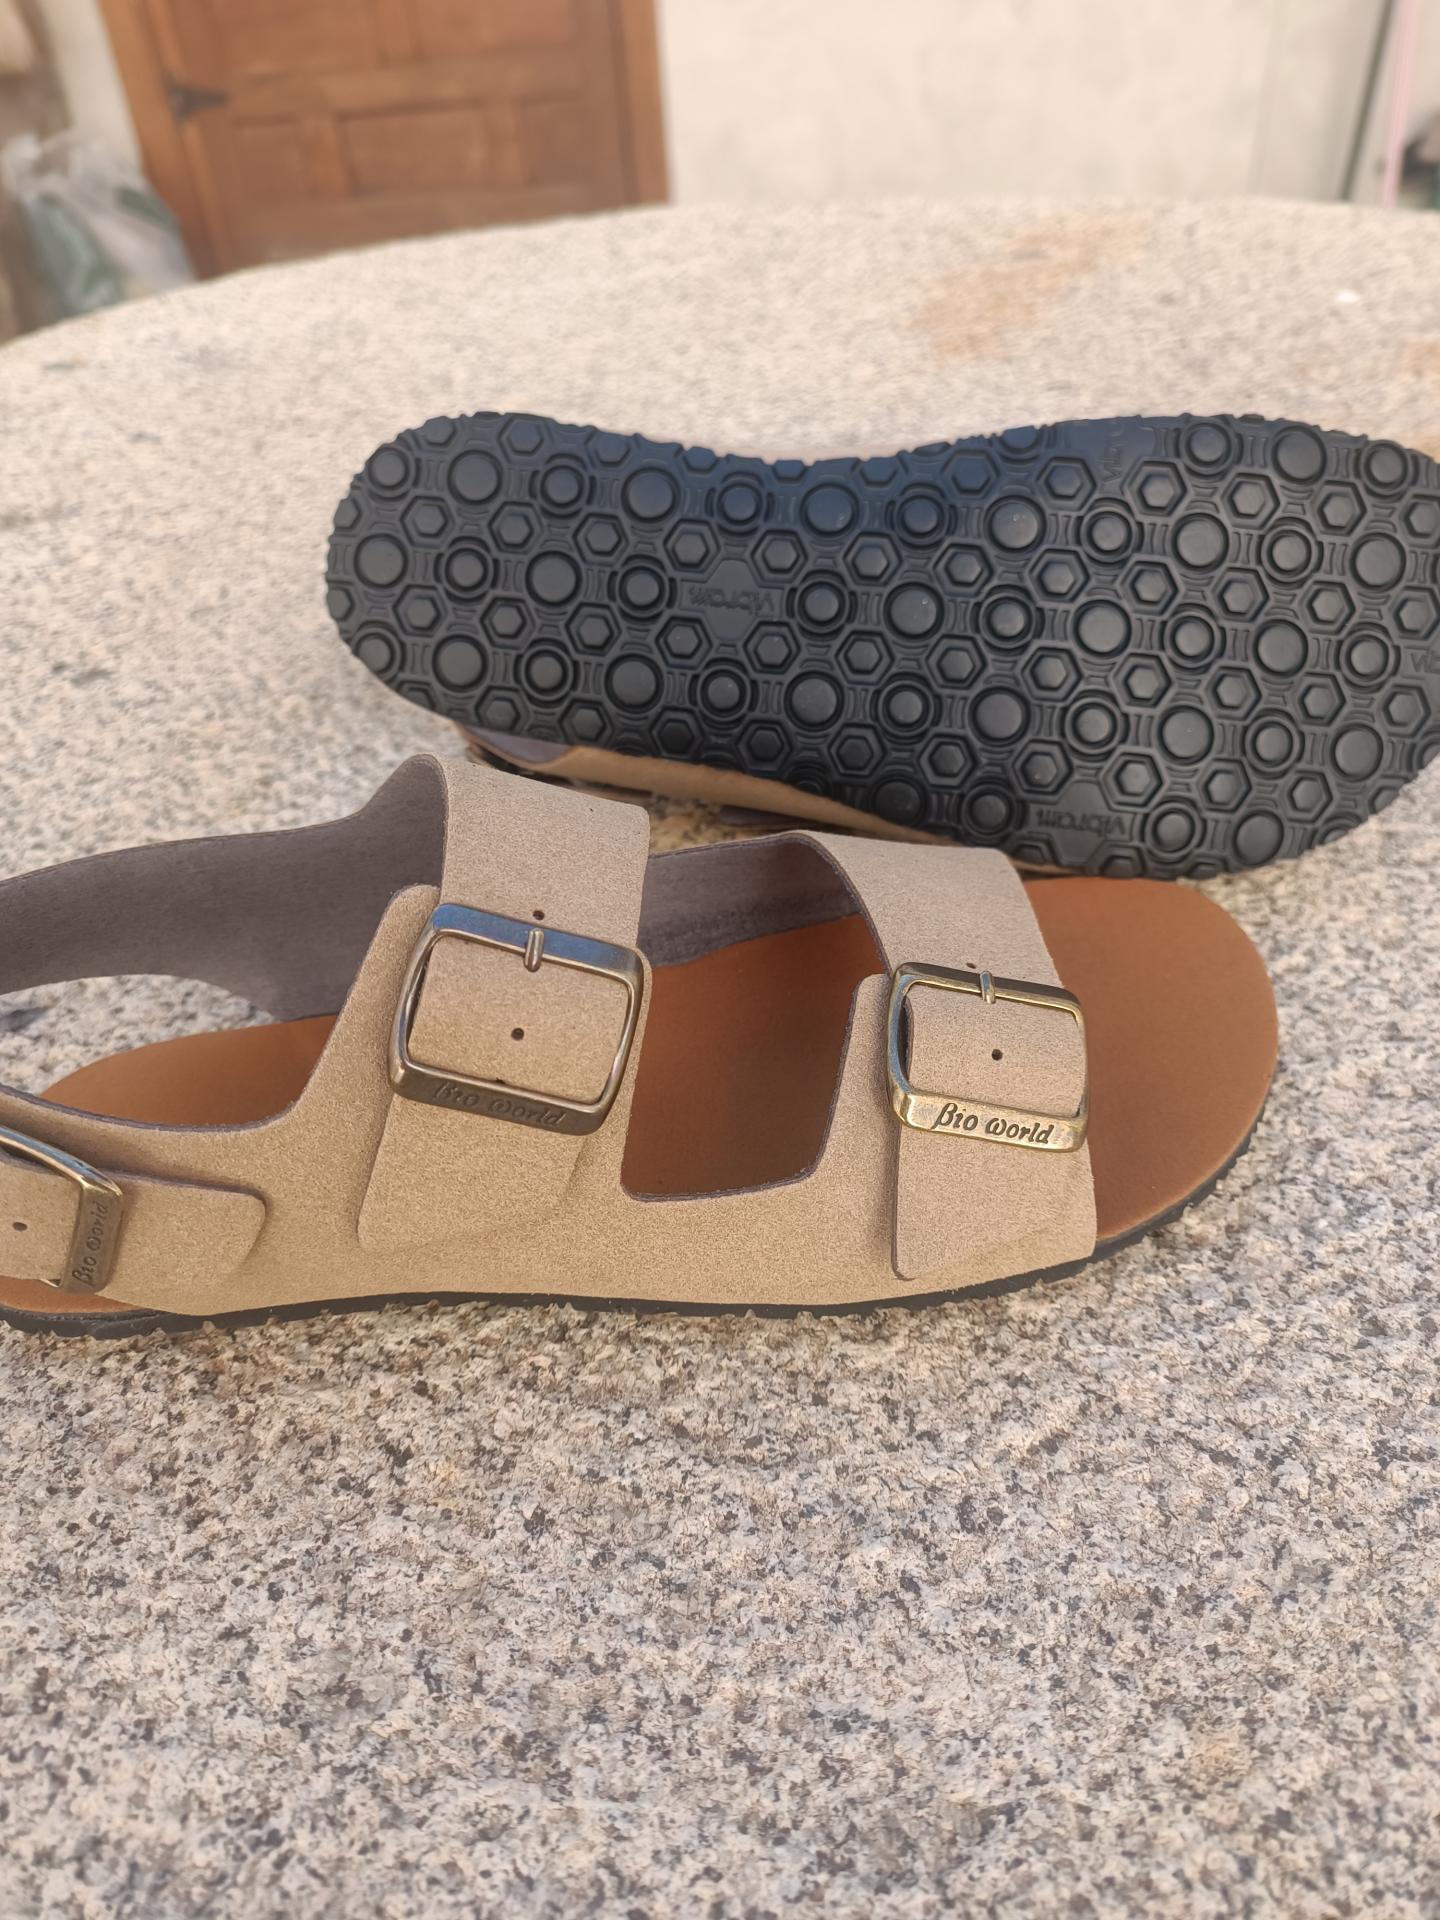 BAREFOOT CHAD color Taupe, sandalias para mujer y hombre, calzado descalzo, sandalias veganas, eco-friendly, barefoot.